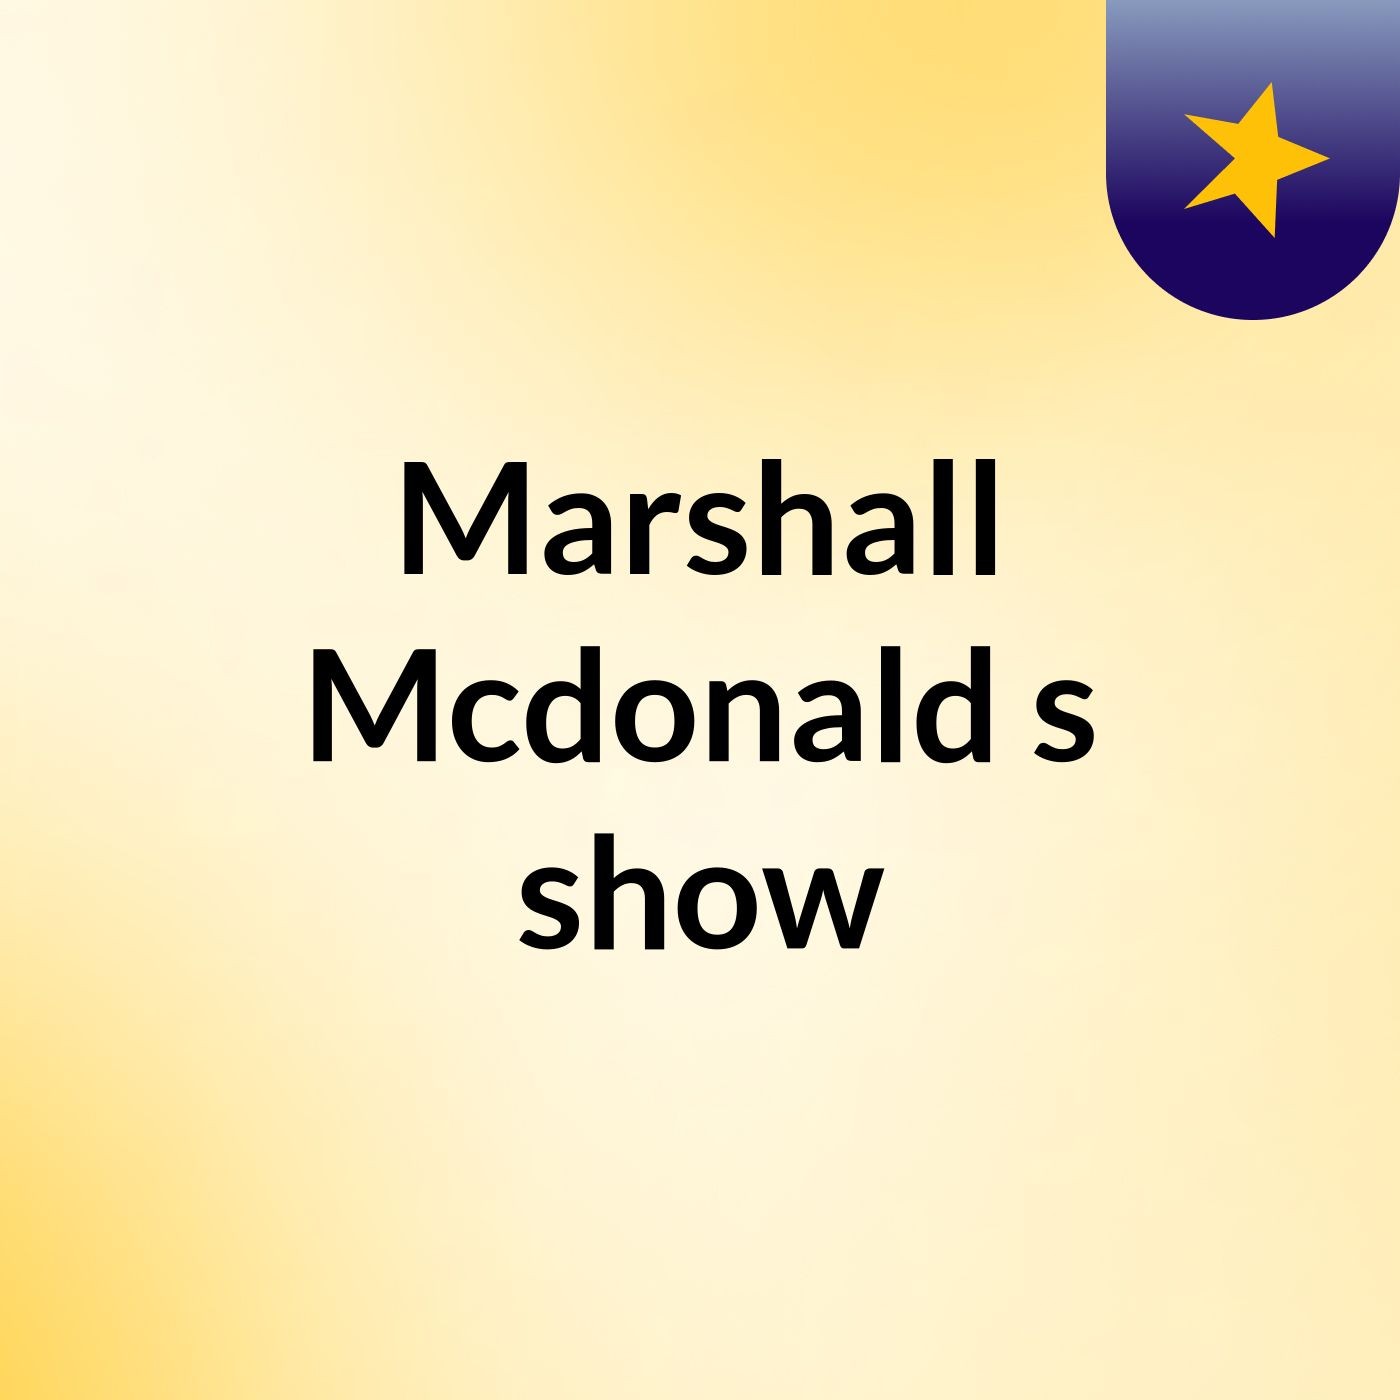 Episode 3 - Marshall Mcdonald's show